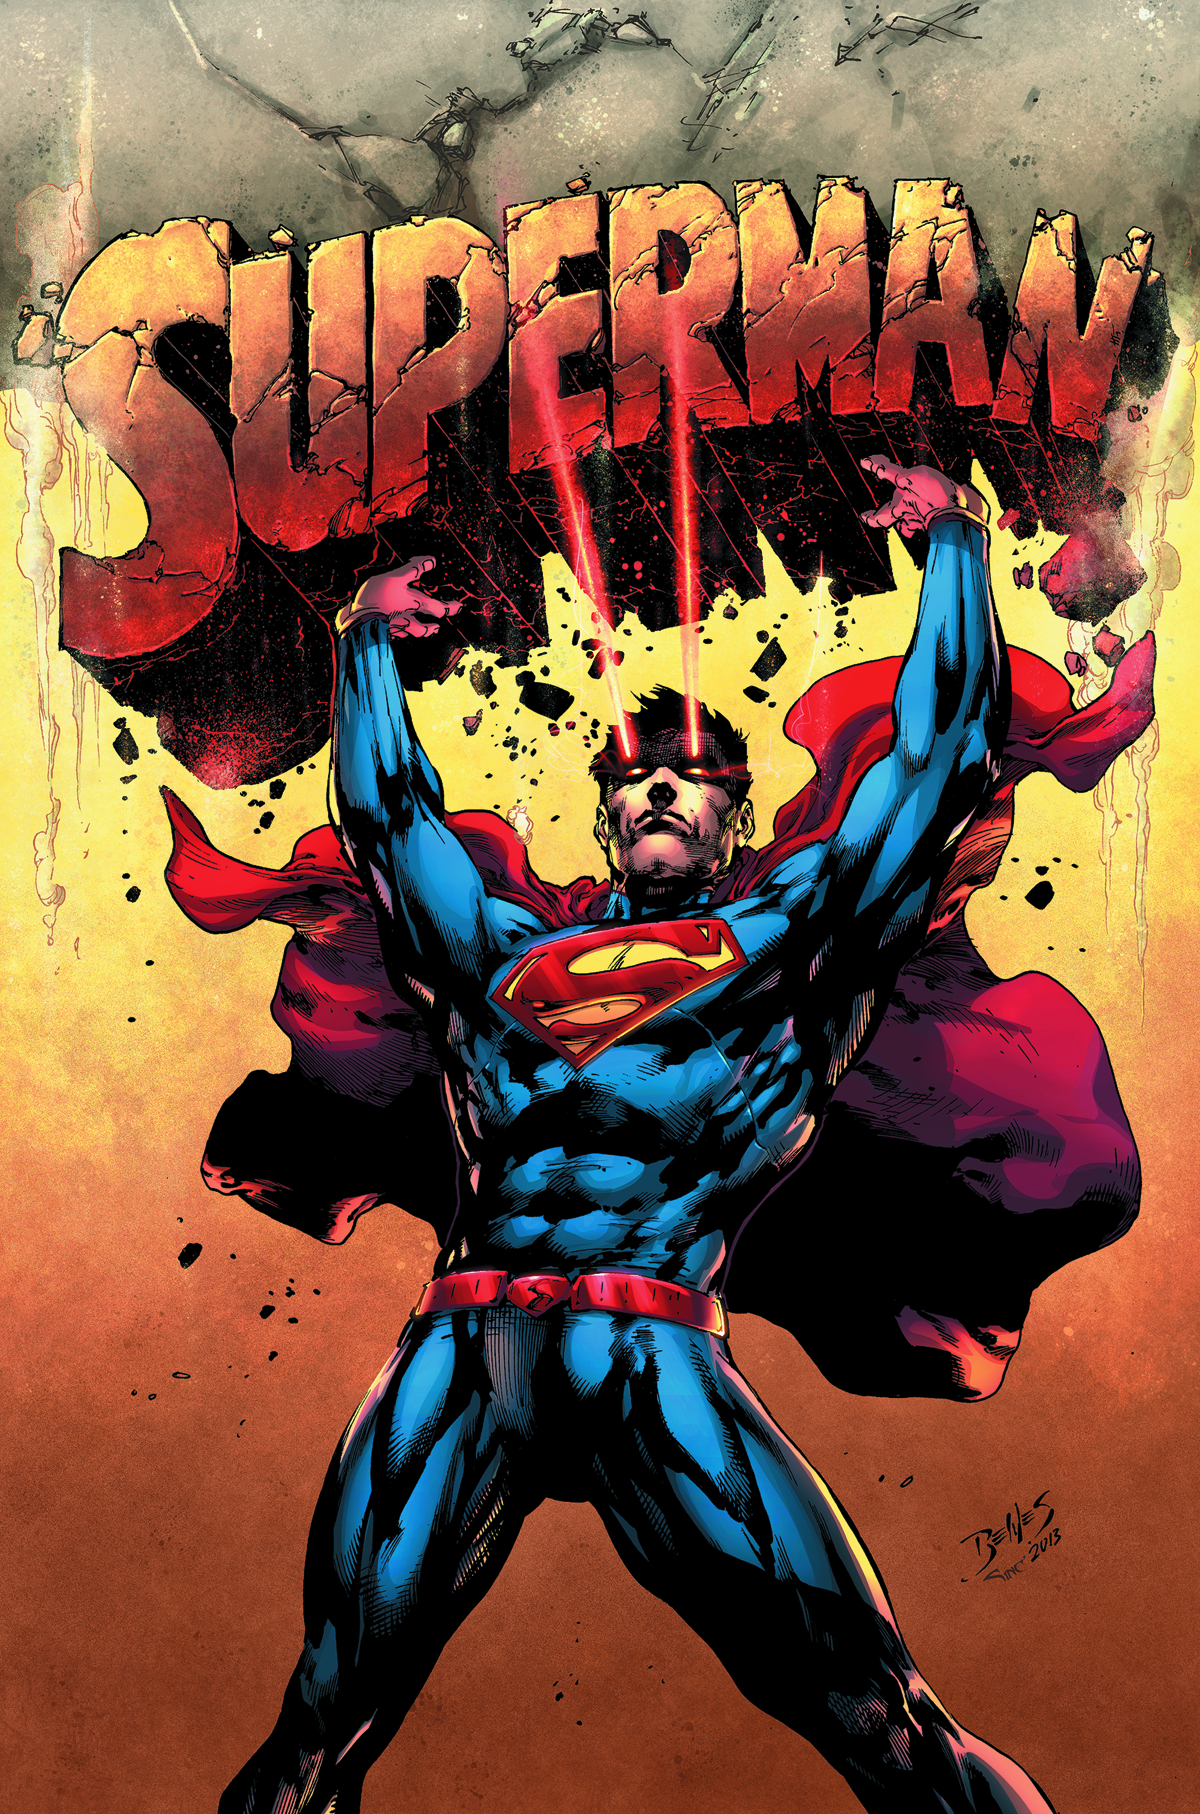 SUPERMAN #28